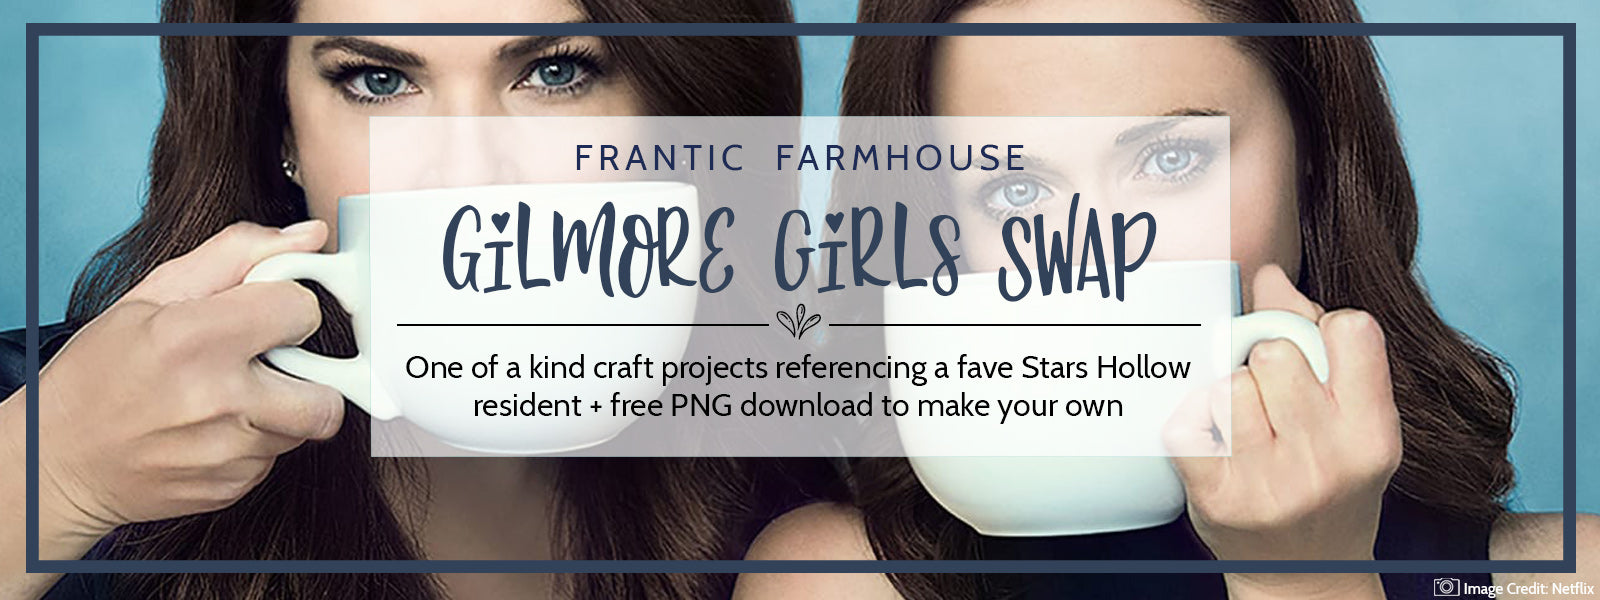 Gilmore Girls Craft Swap - Frantic Farmhouse